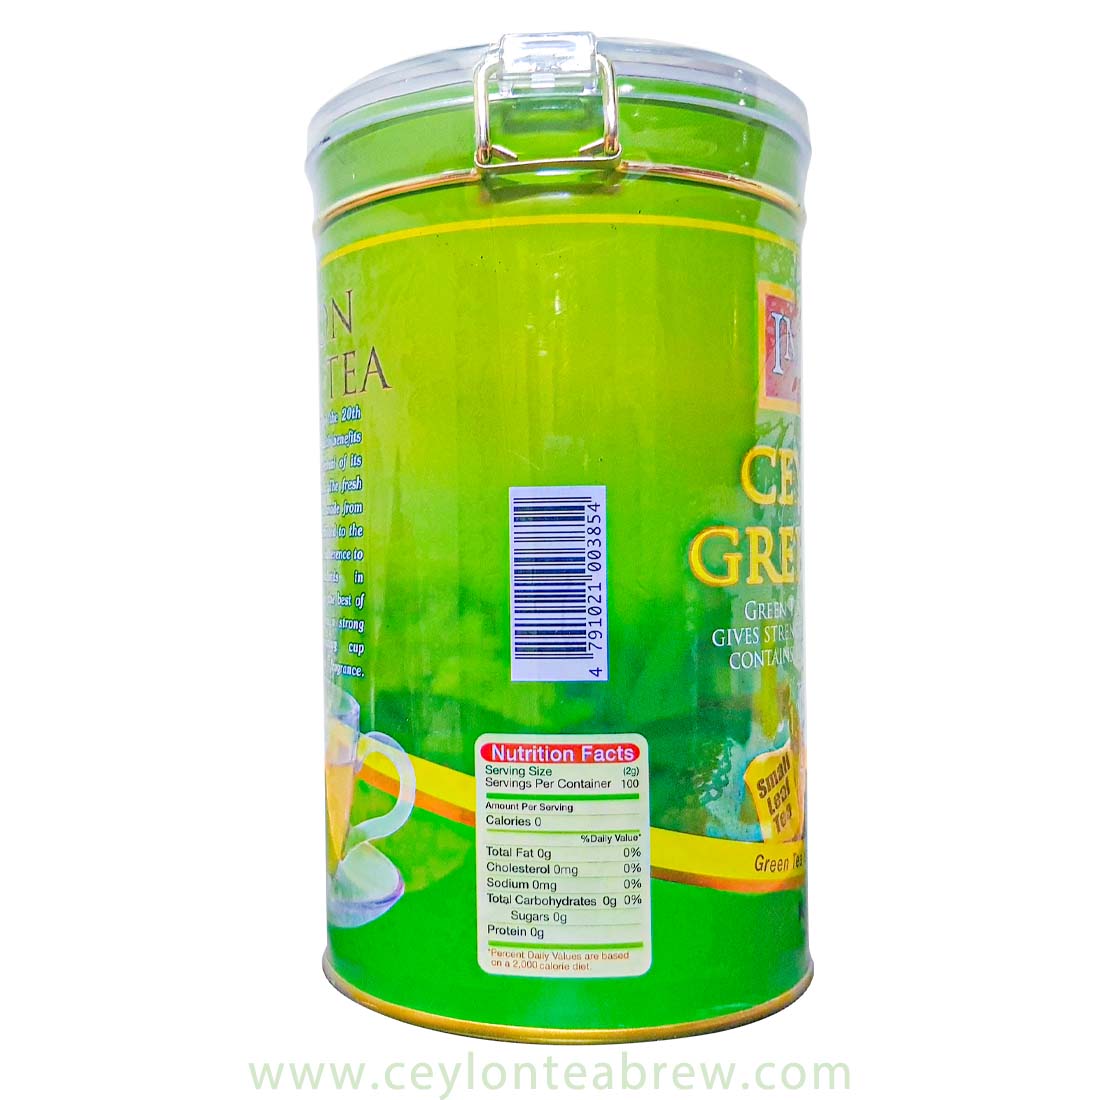 Impra Ceylon Pure Green Tea Fresh small Leaves tea 200g can nutrition facts